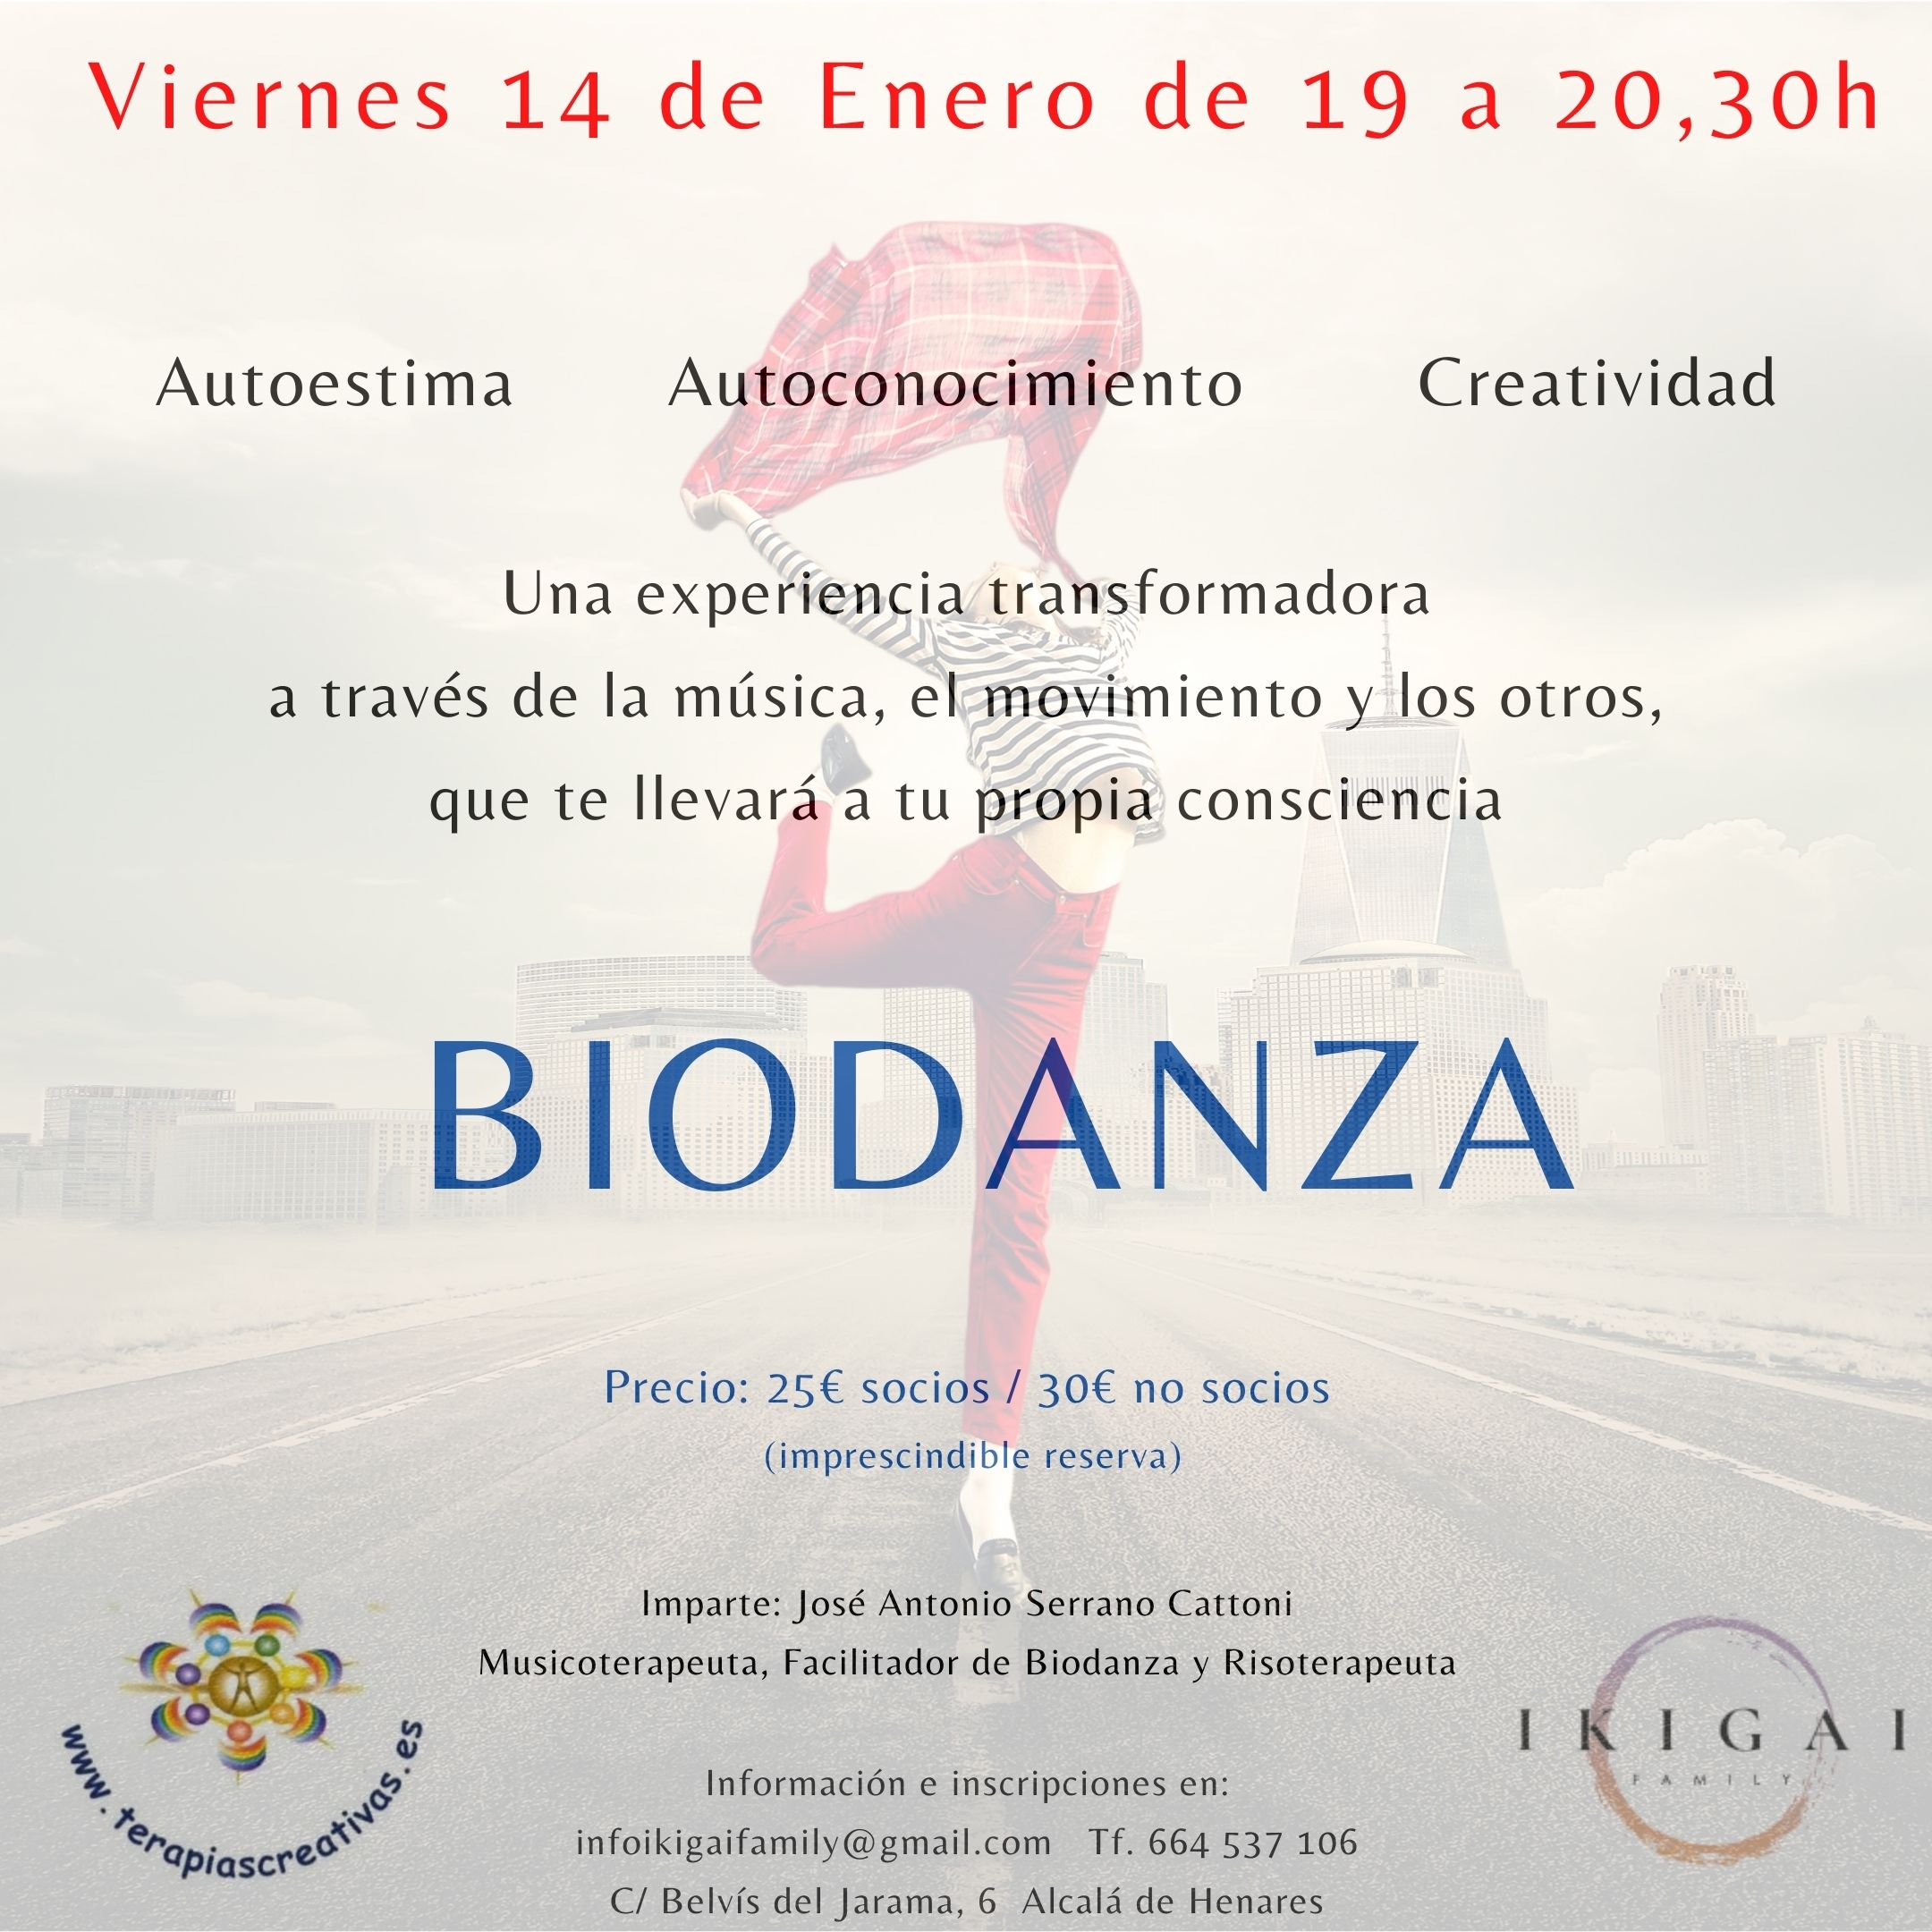  Biodanza-Ikigay-14ENE22